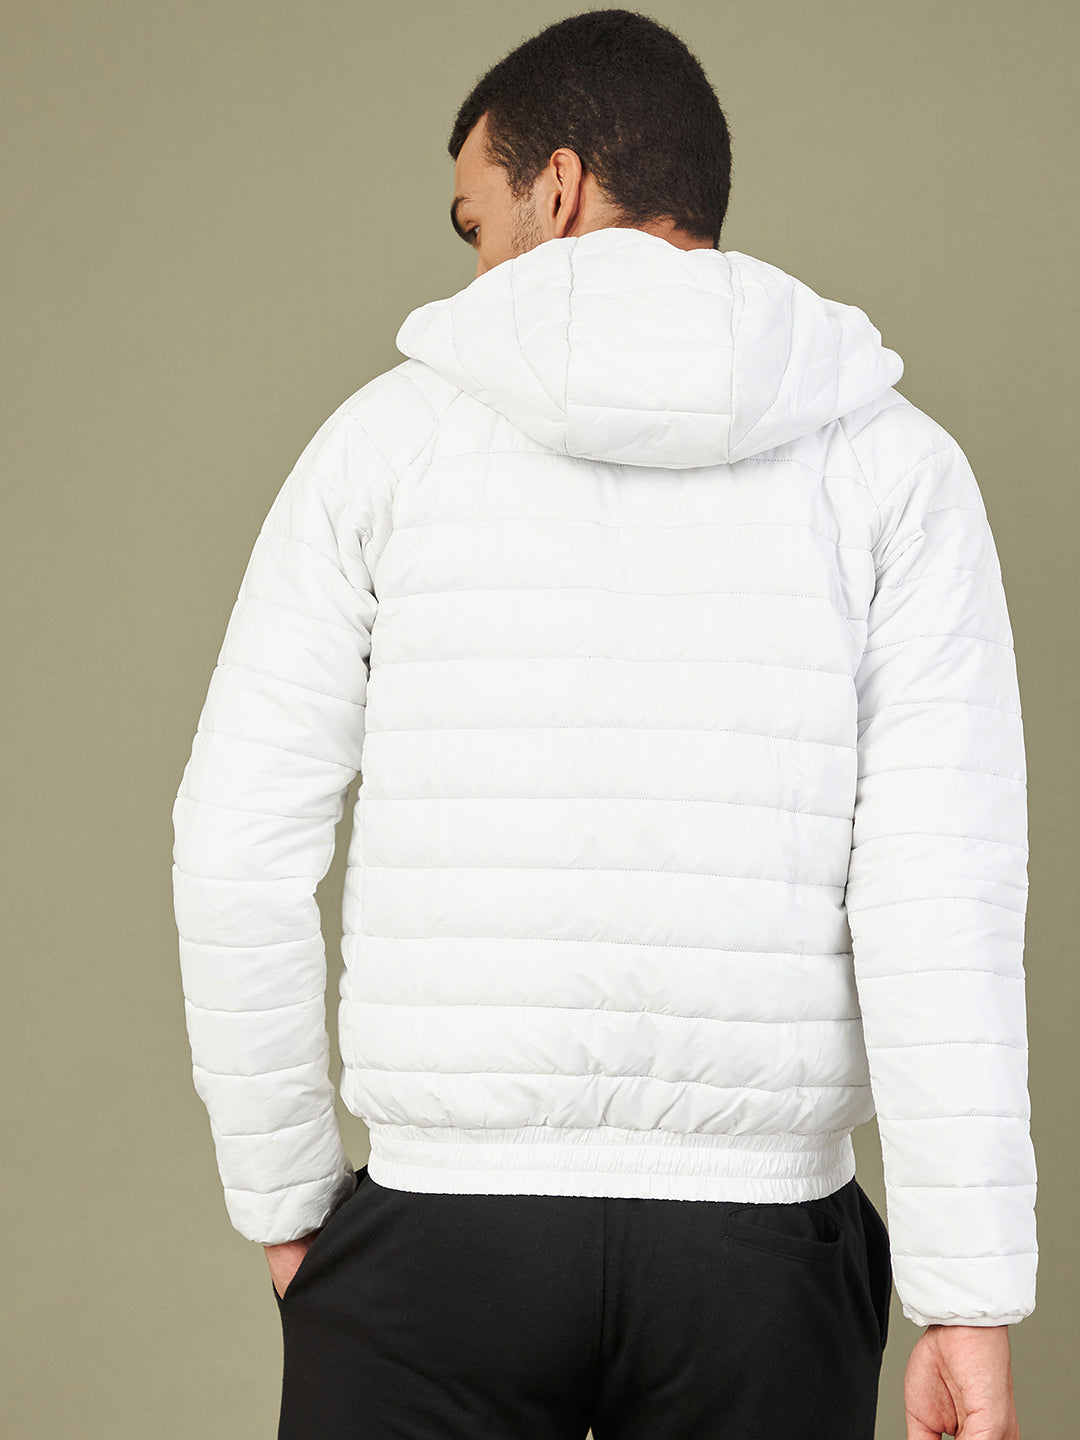 Men's White Full Sleeve Puffer Hoodie Jacket